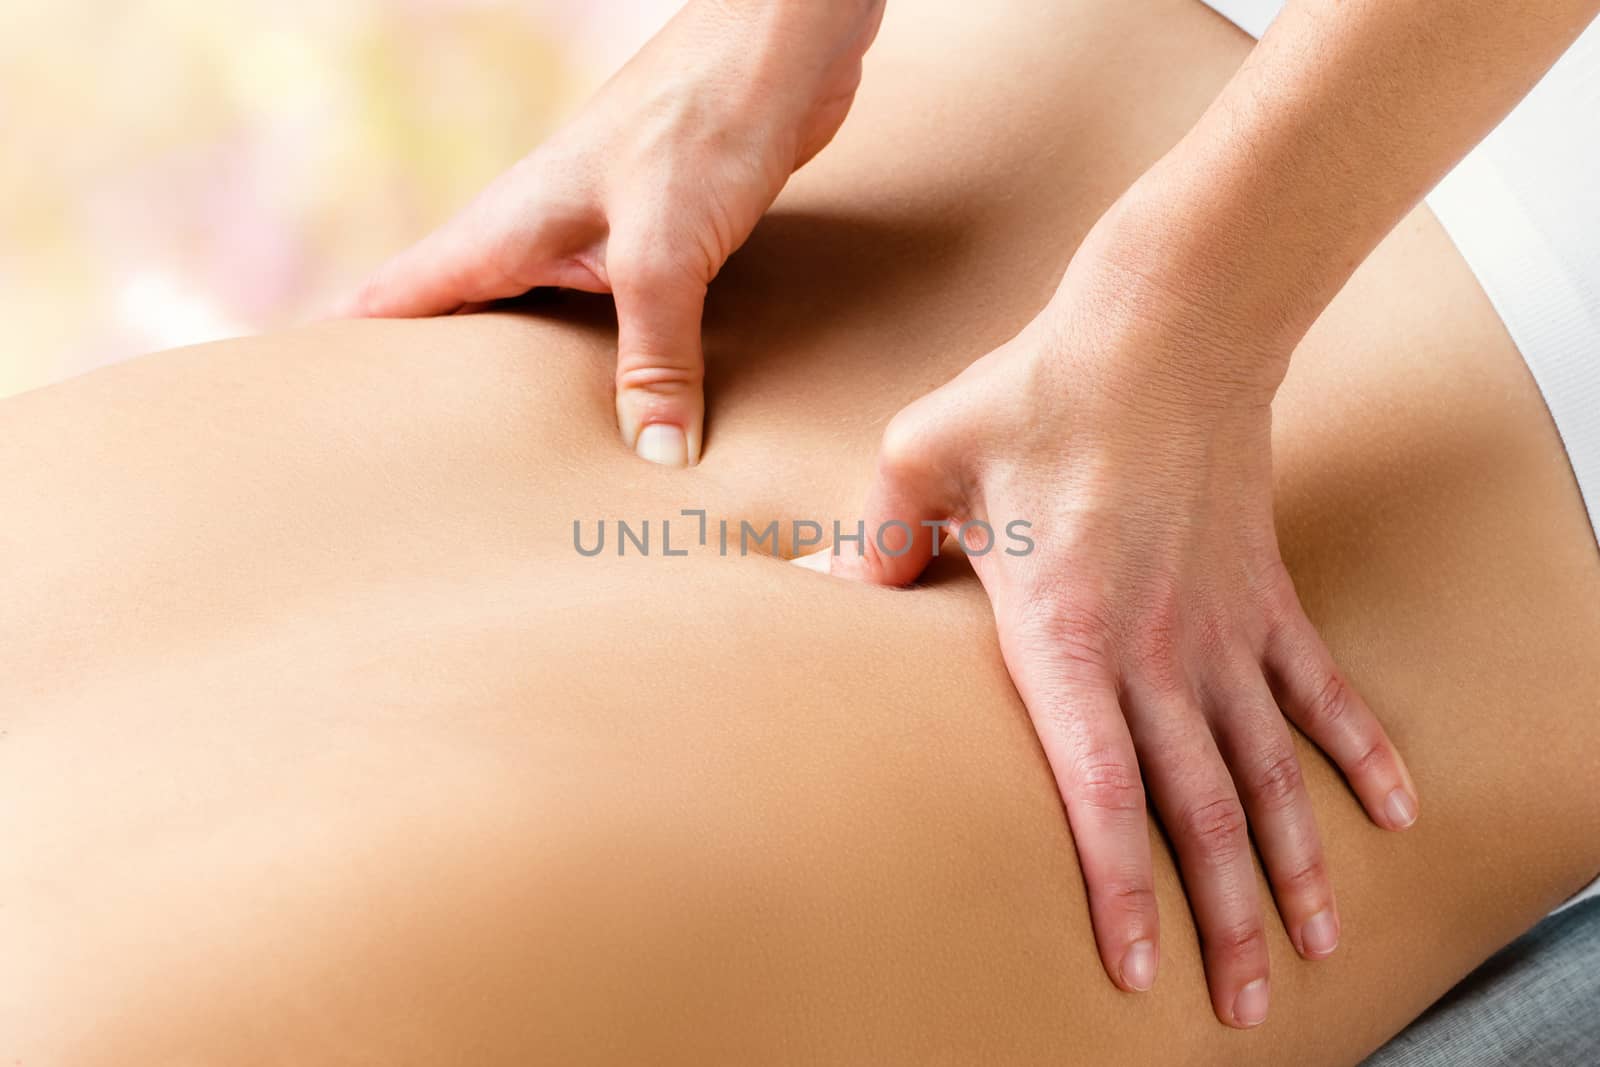 Therapist doing lower lumbar massage on woman. by karelnoppe